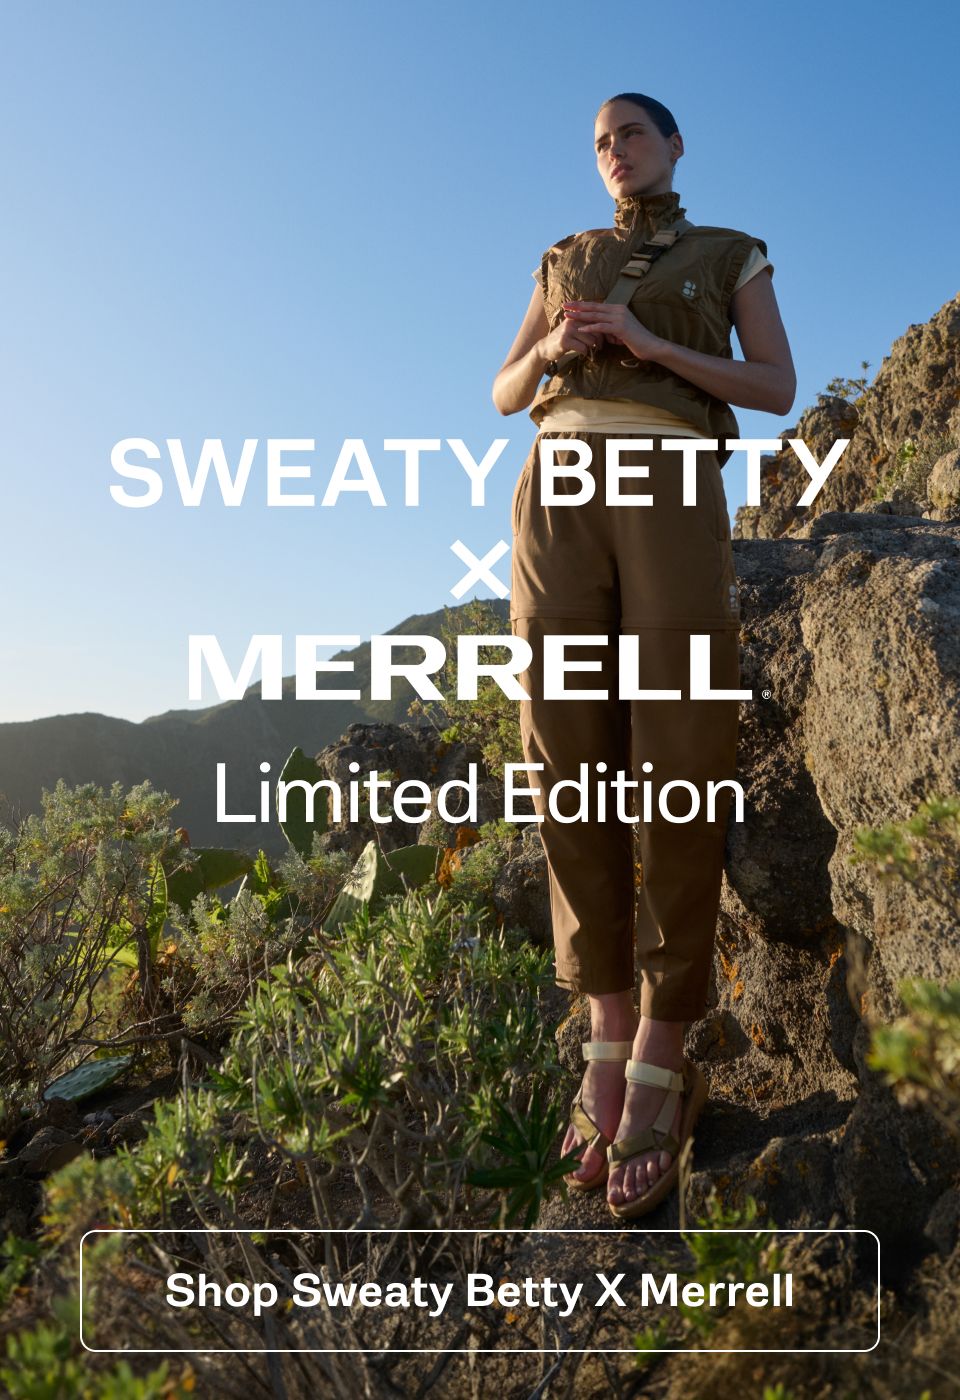 Shop Sweaty Betty X Merrell.